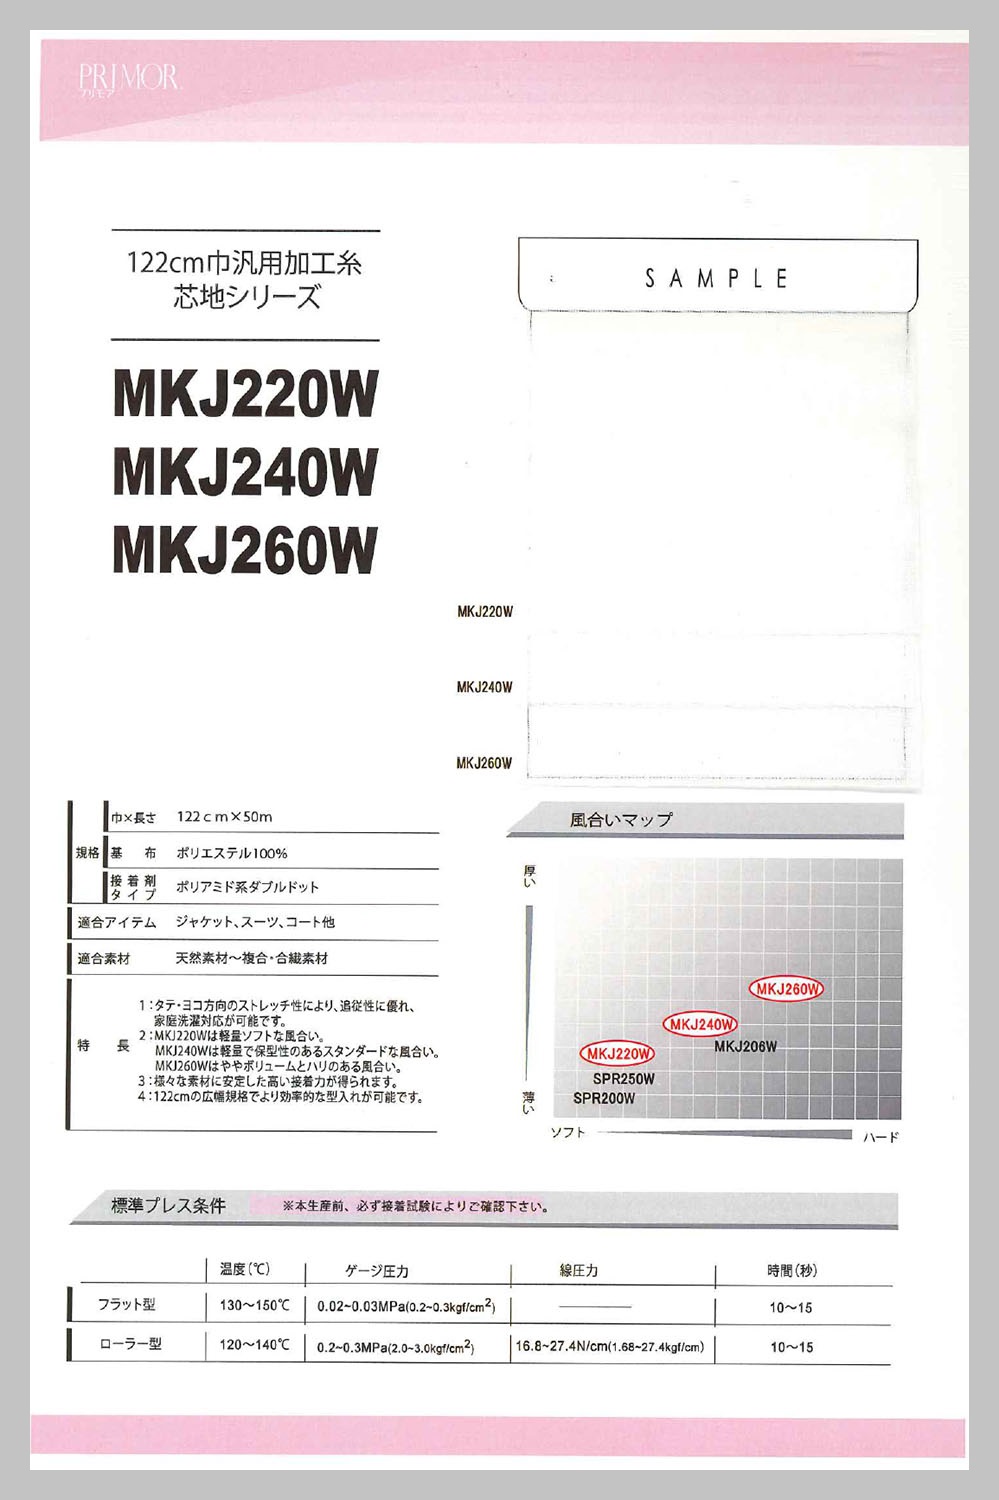 MKJ260W ジャケット・コート用汎用加工糸芯地日中グローバル展開シリーズ